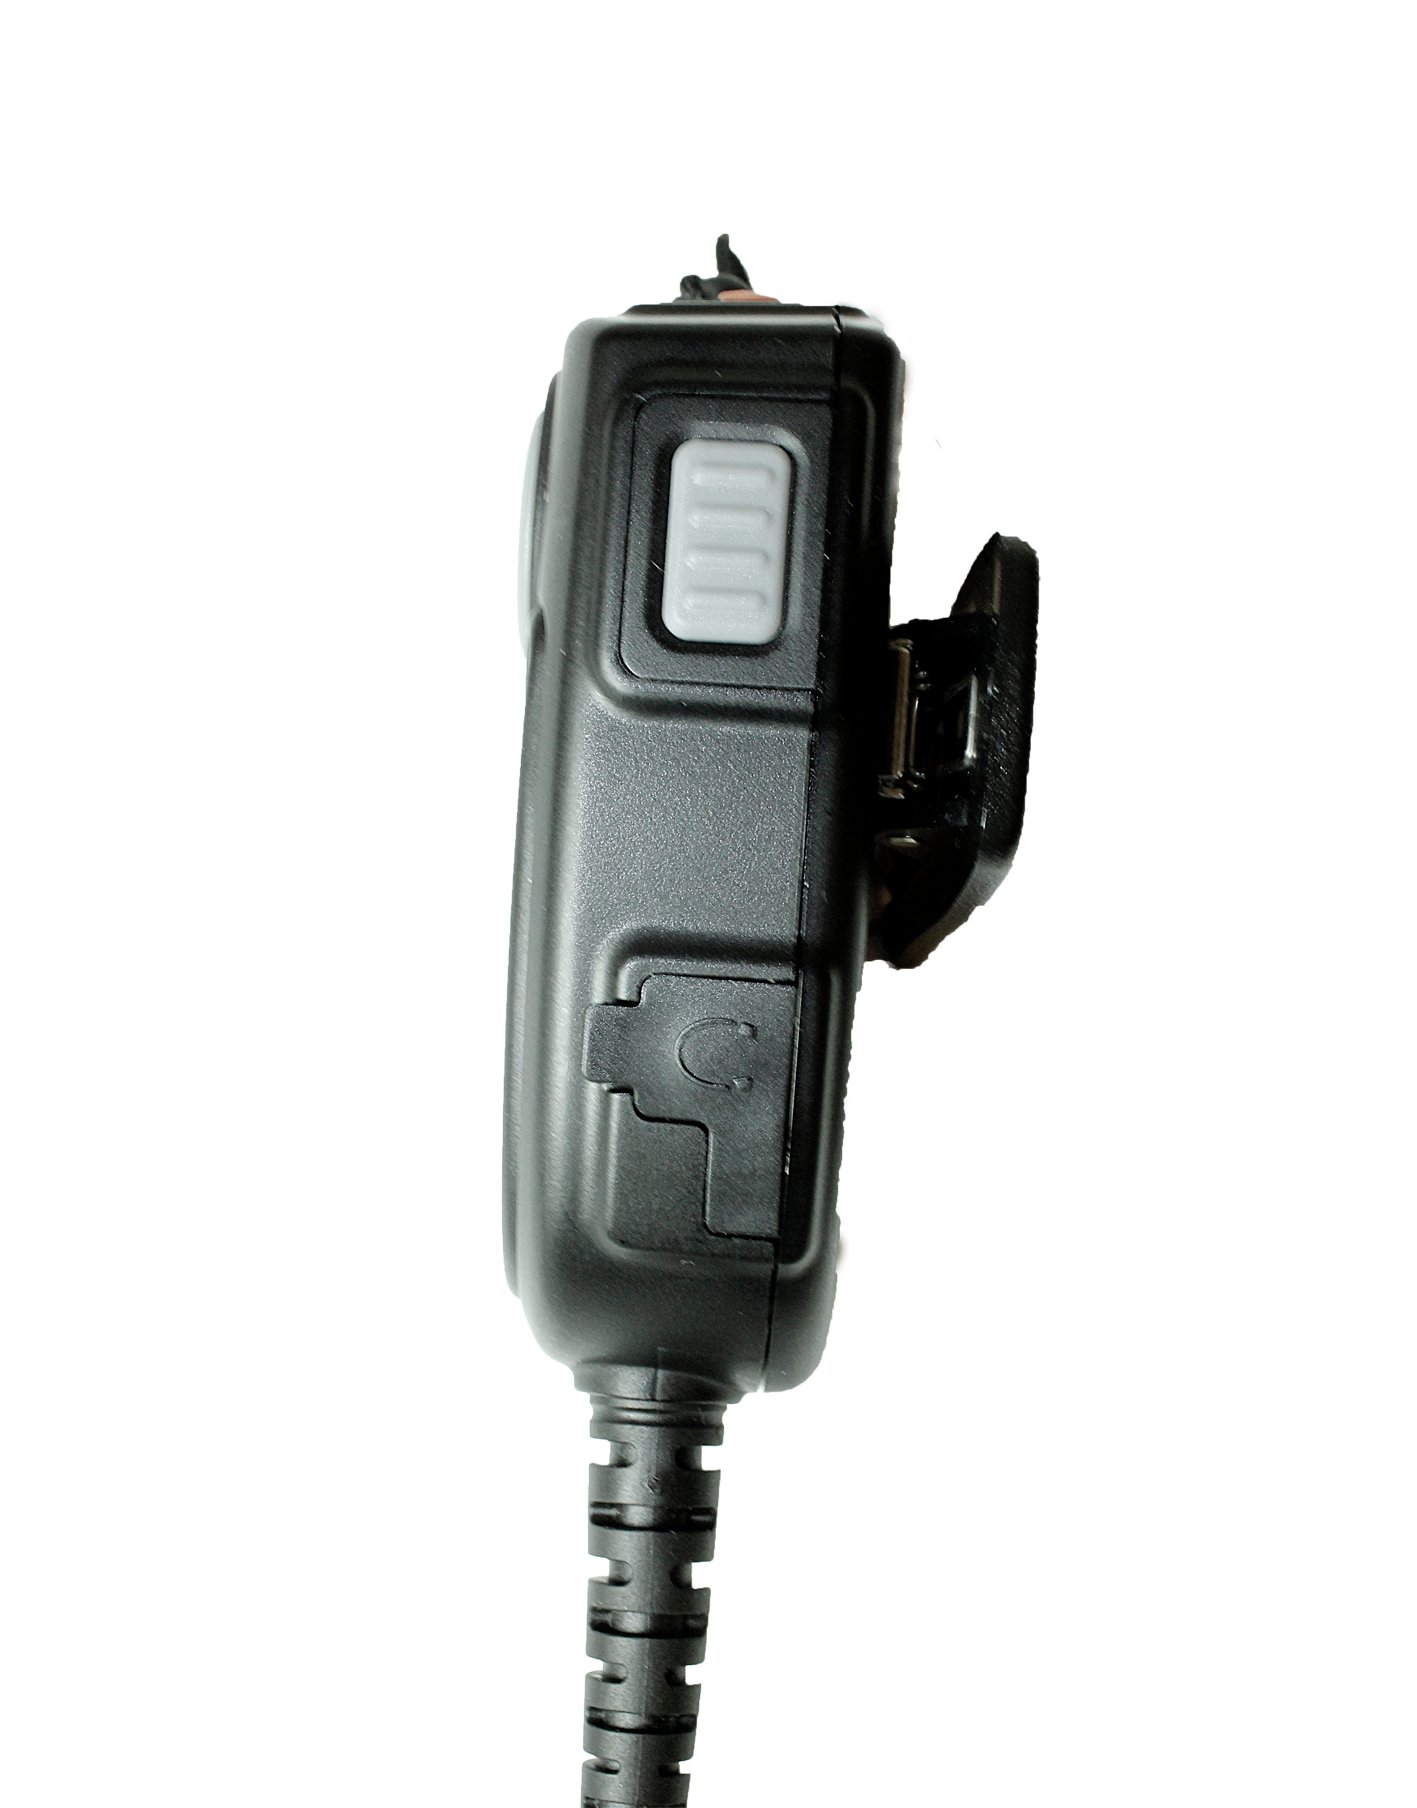 TITAN Lautsprechermikrofon MM20 mit Nexus 01 passend für Sepura SRH3500, SRH3800, SRH3900